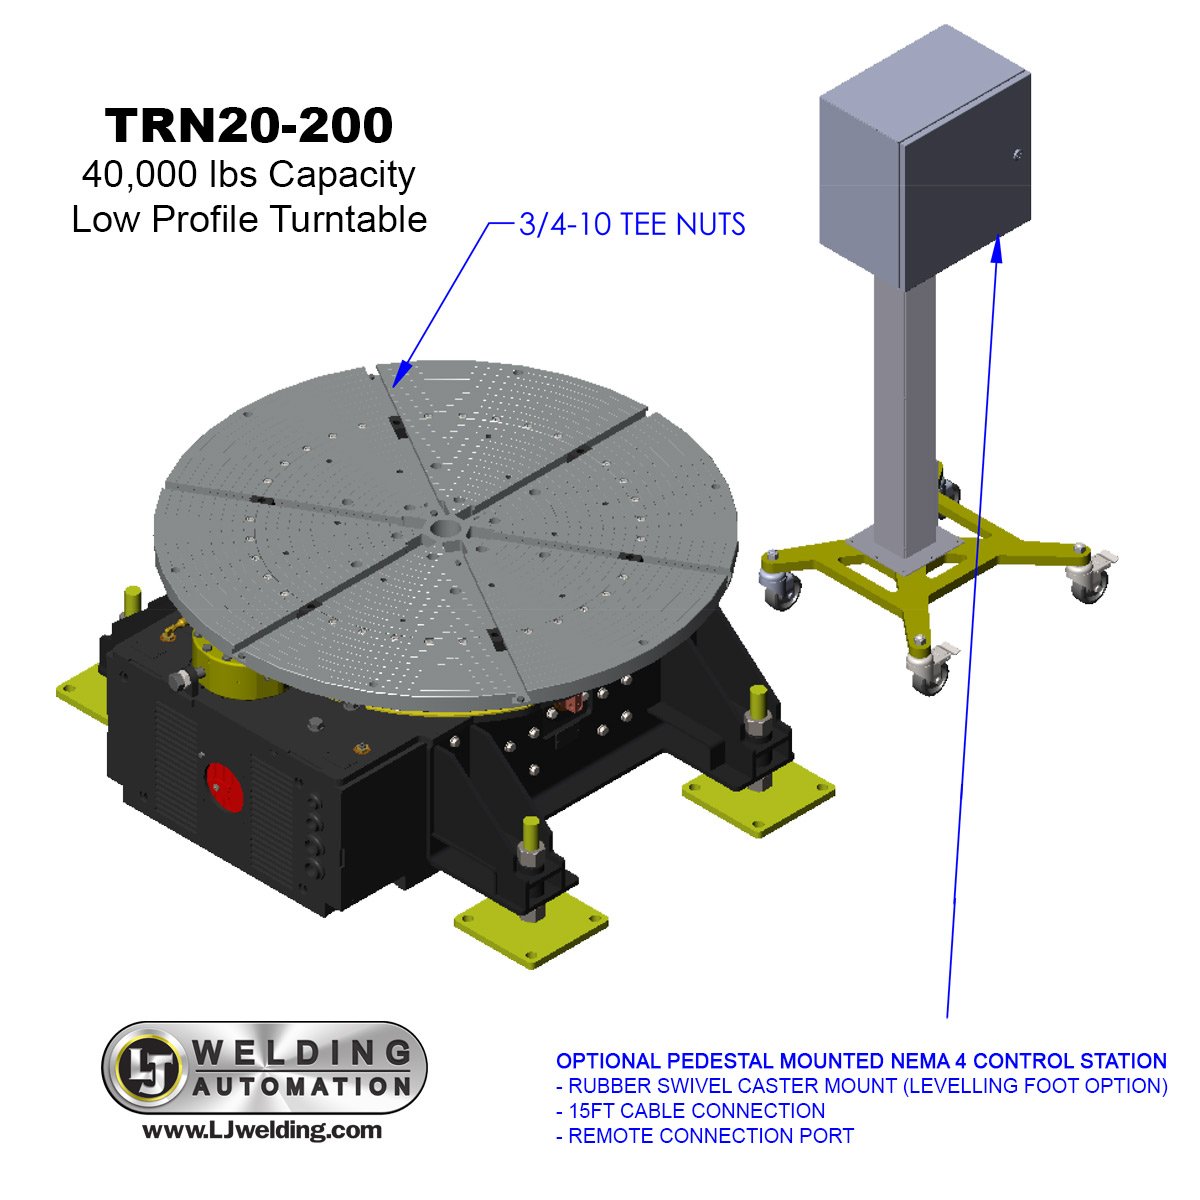 TRN20-200 rotary turntable